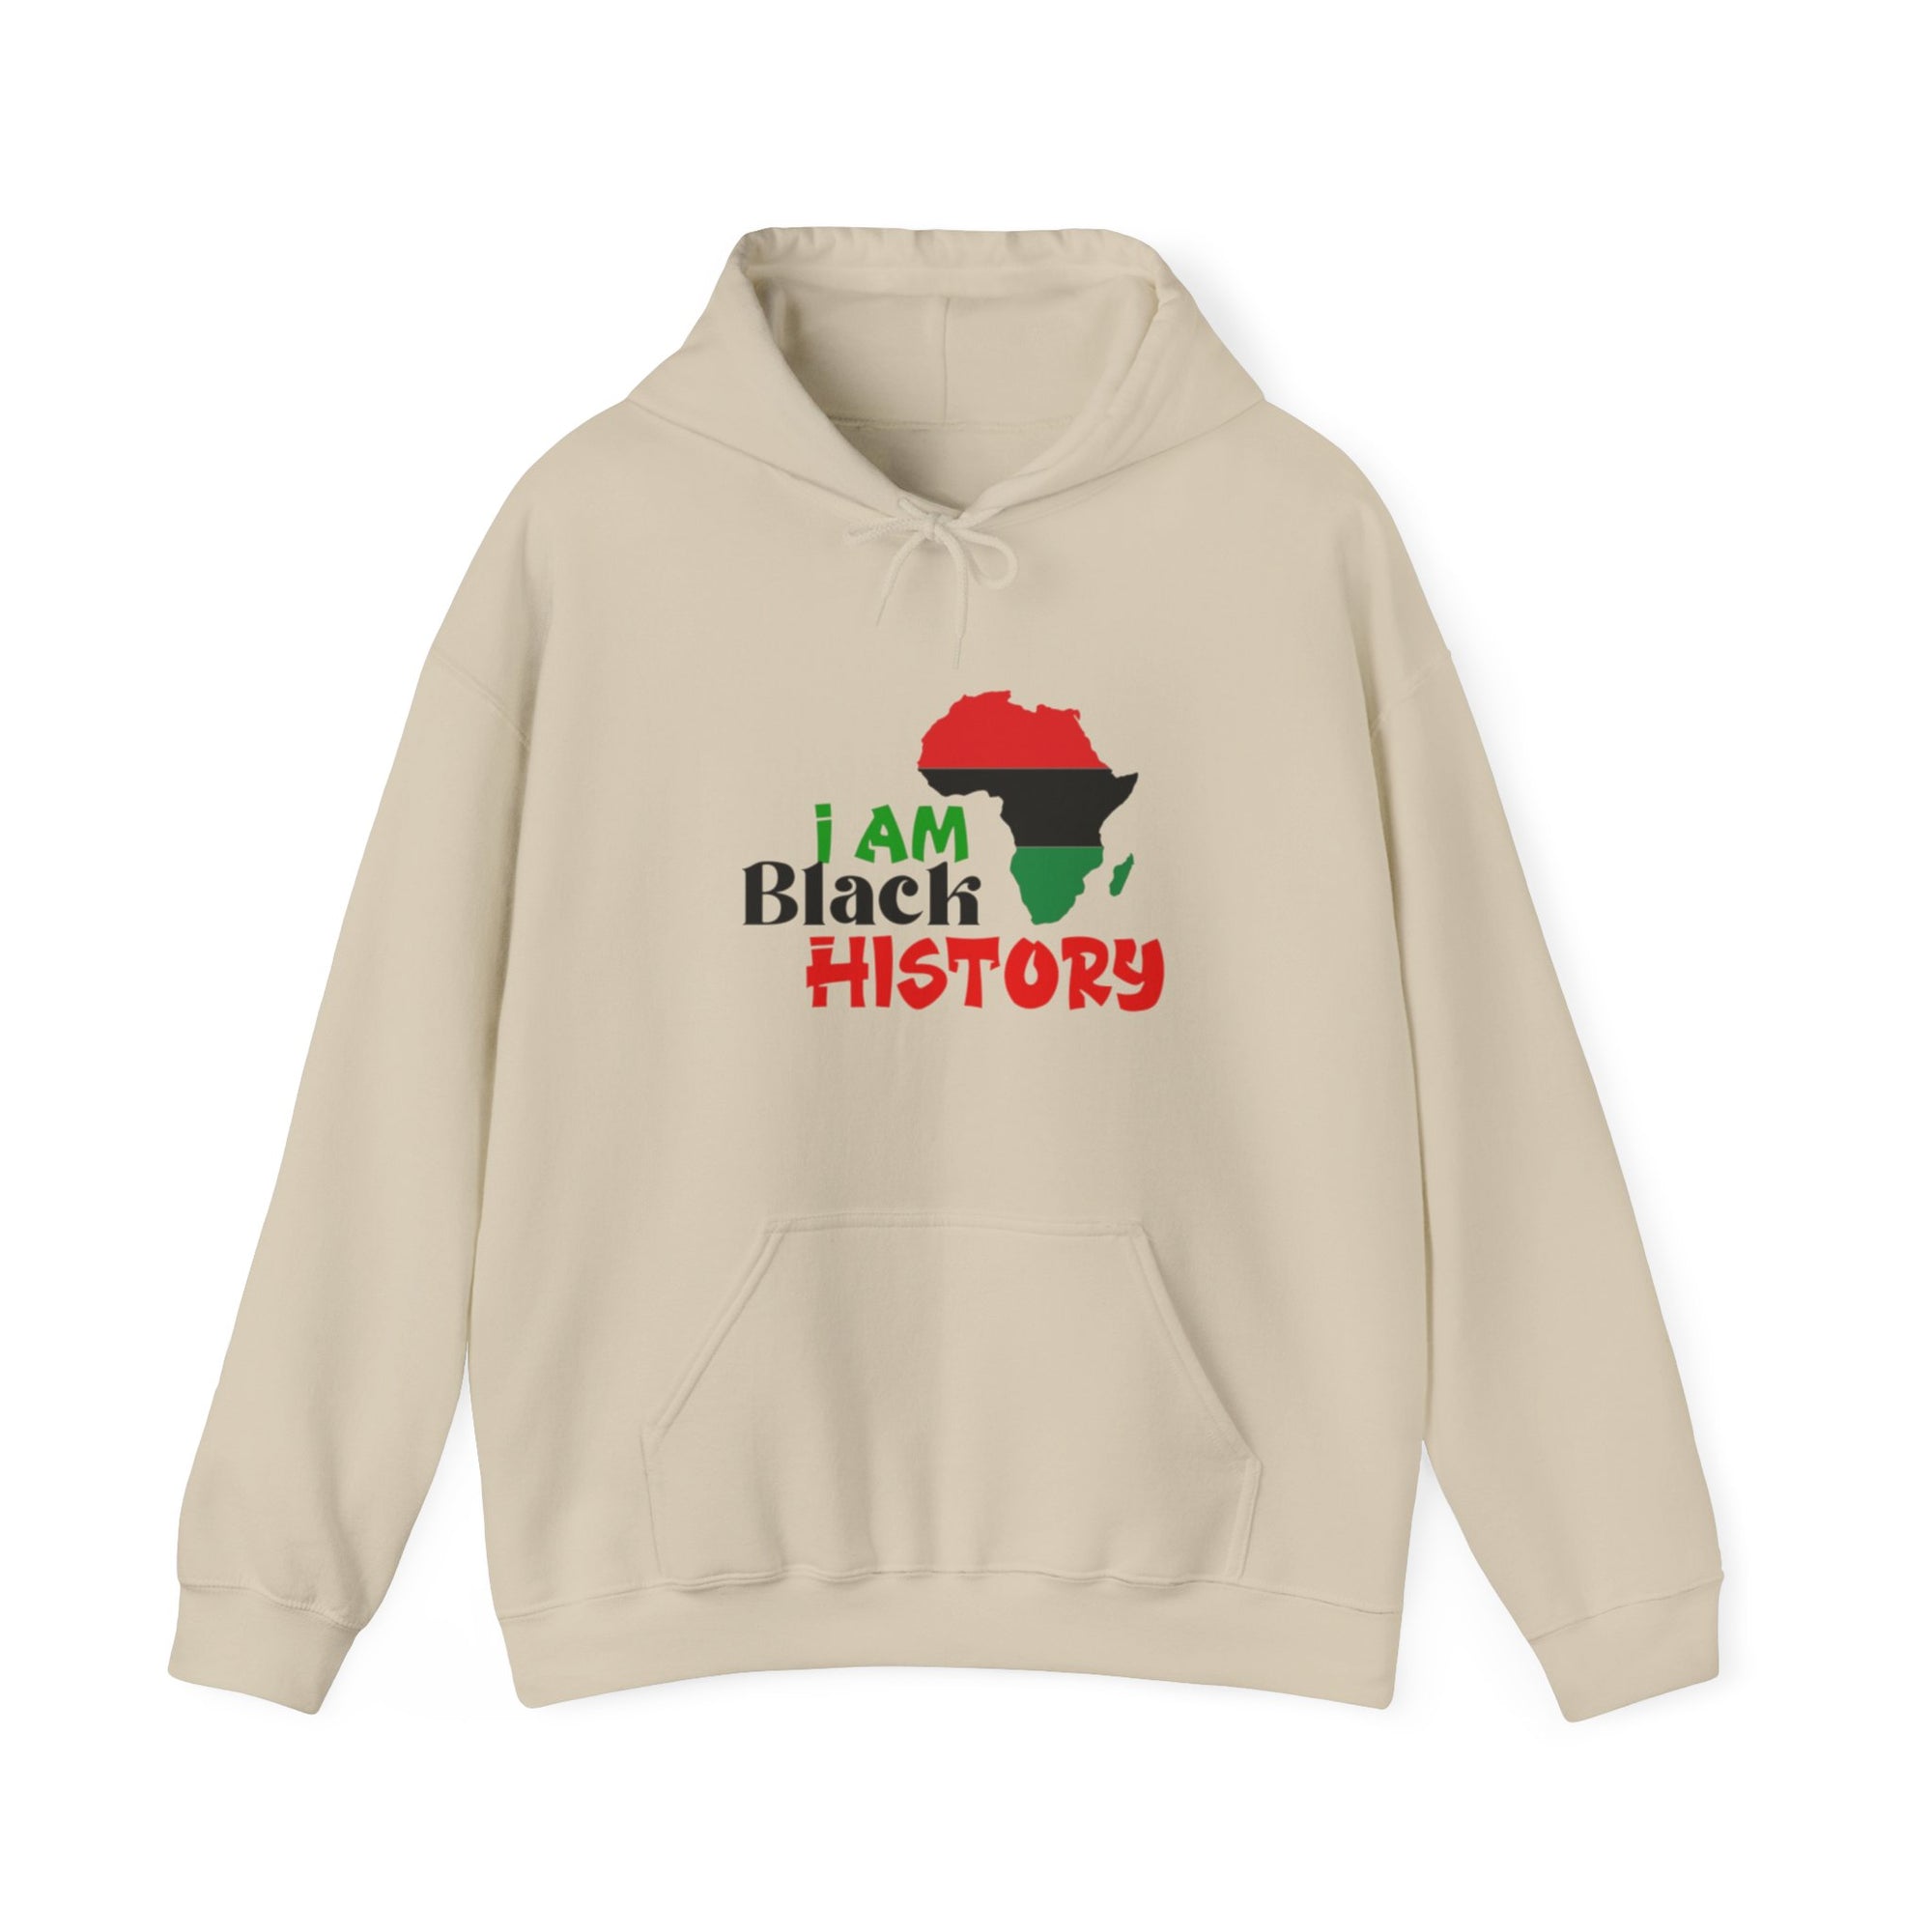 I am Black History Hooded Sweatshirt